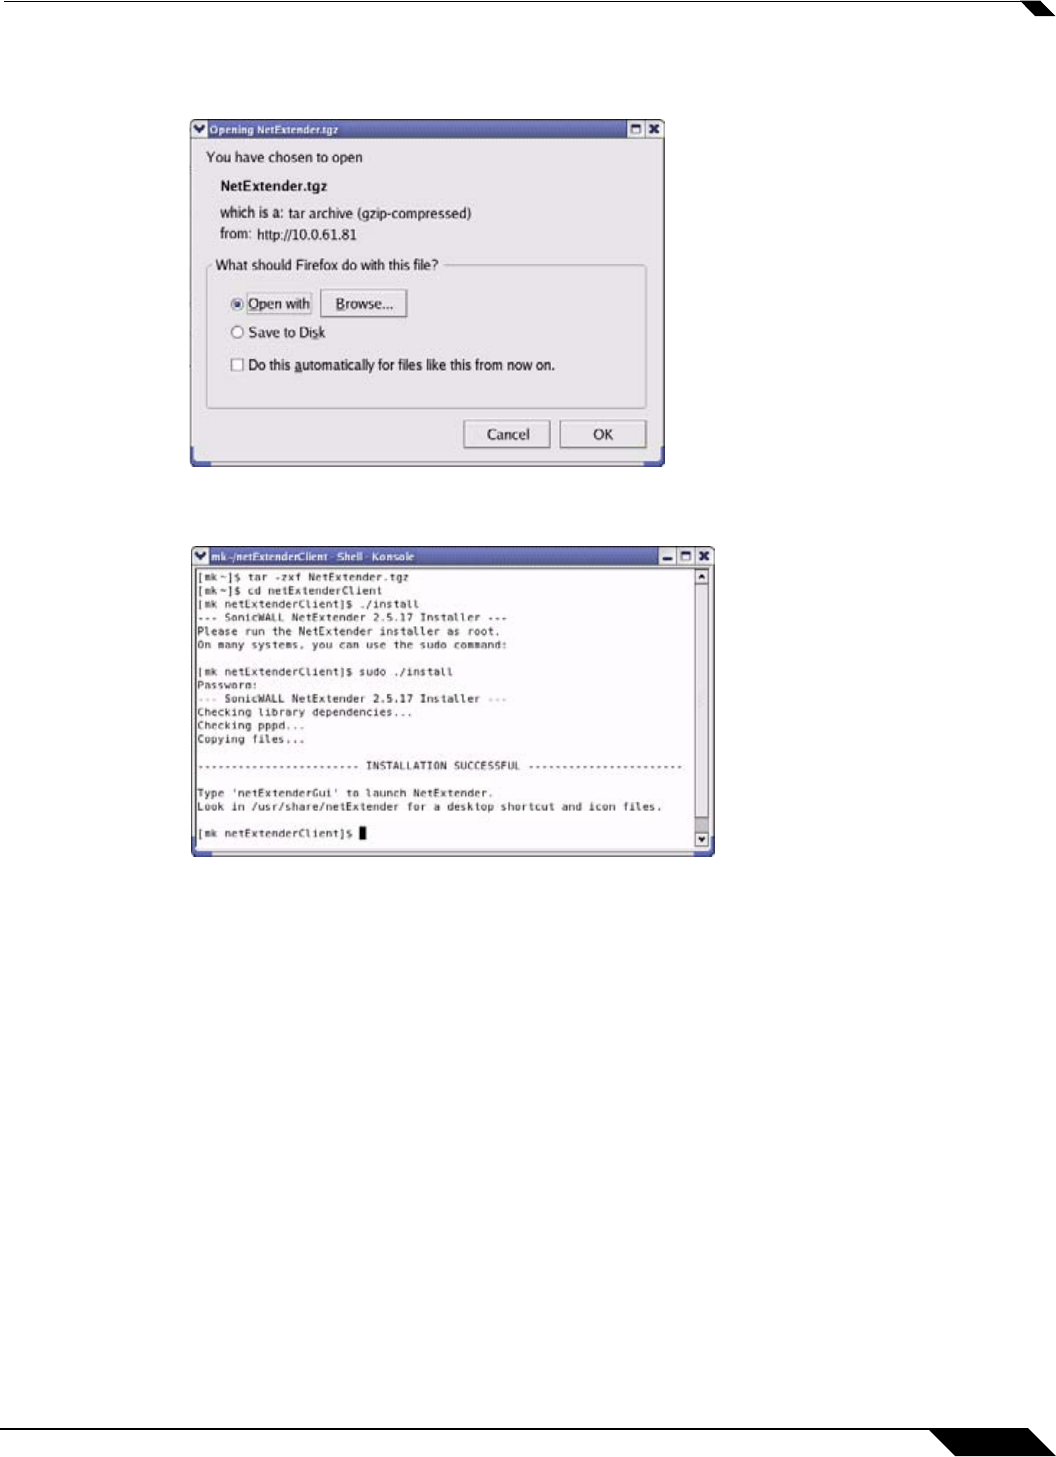 windows 10 blocks sonicwall netextender install